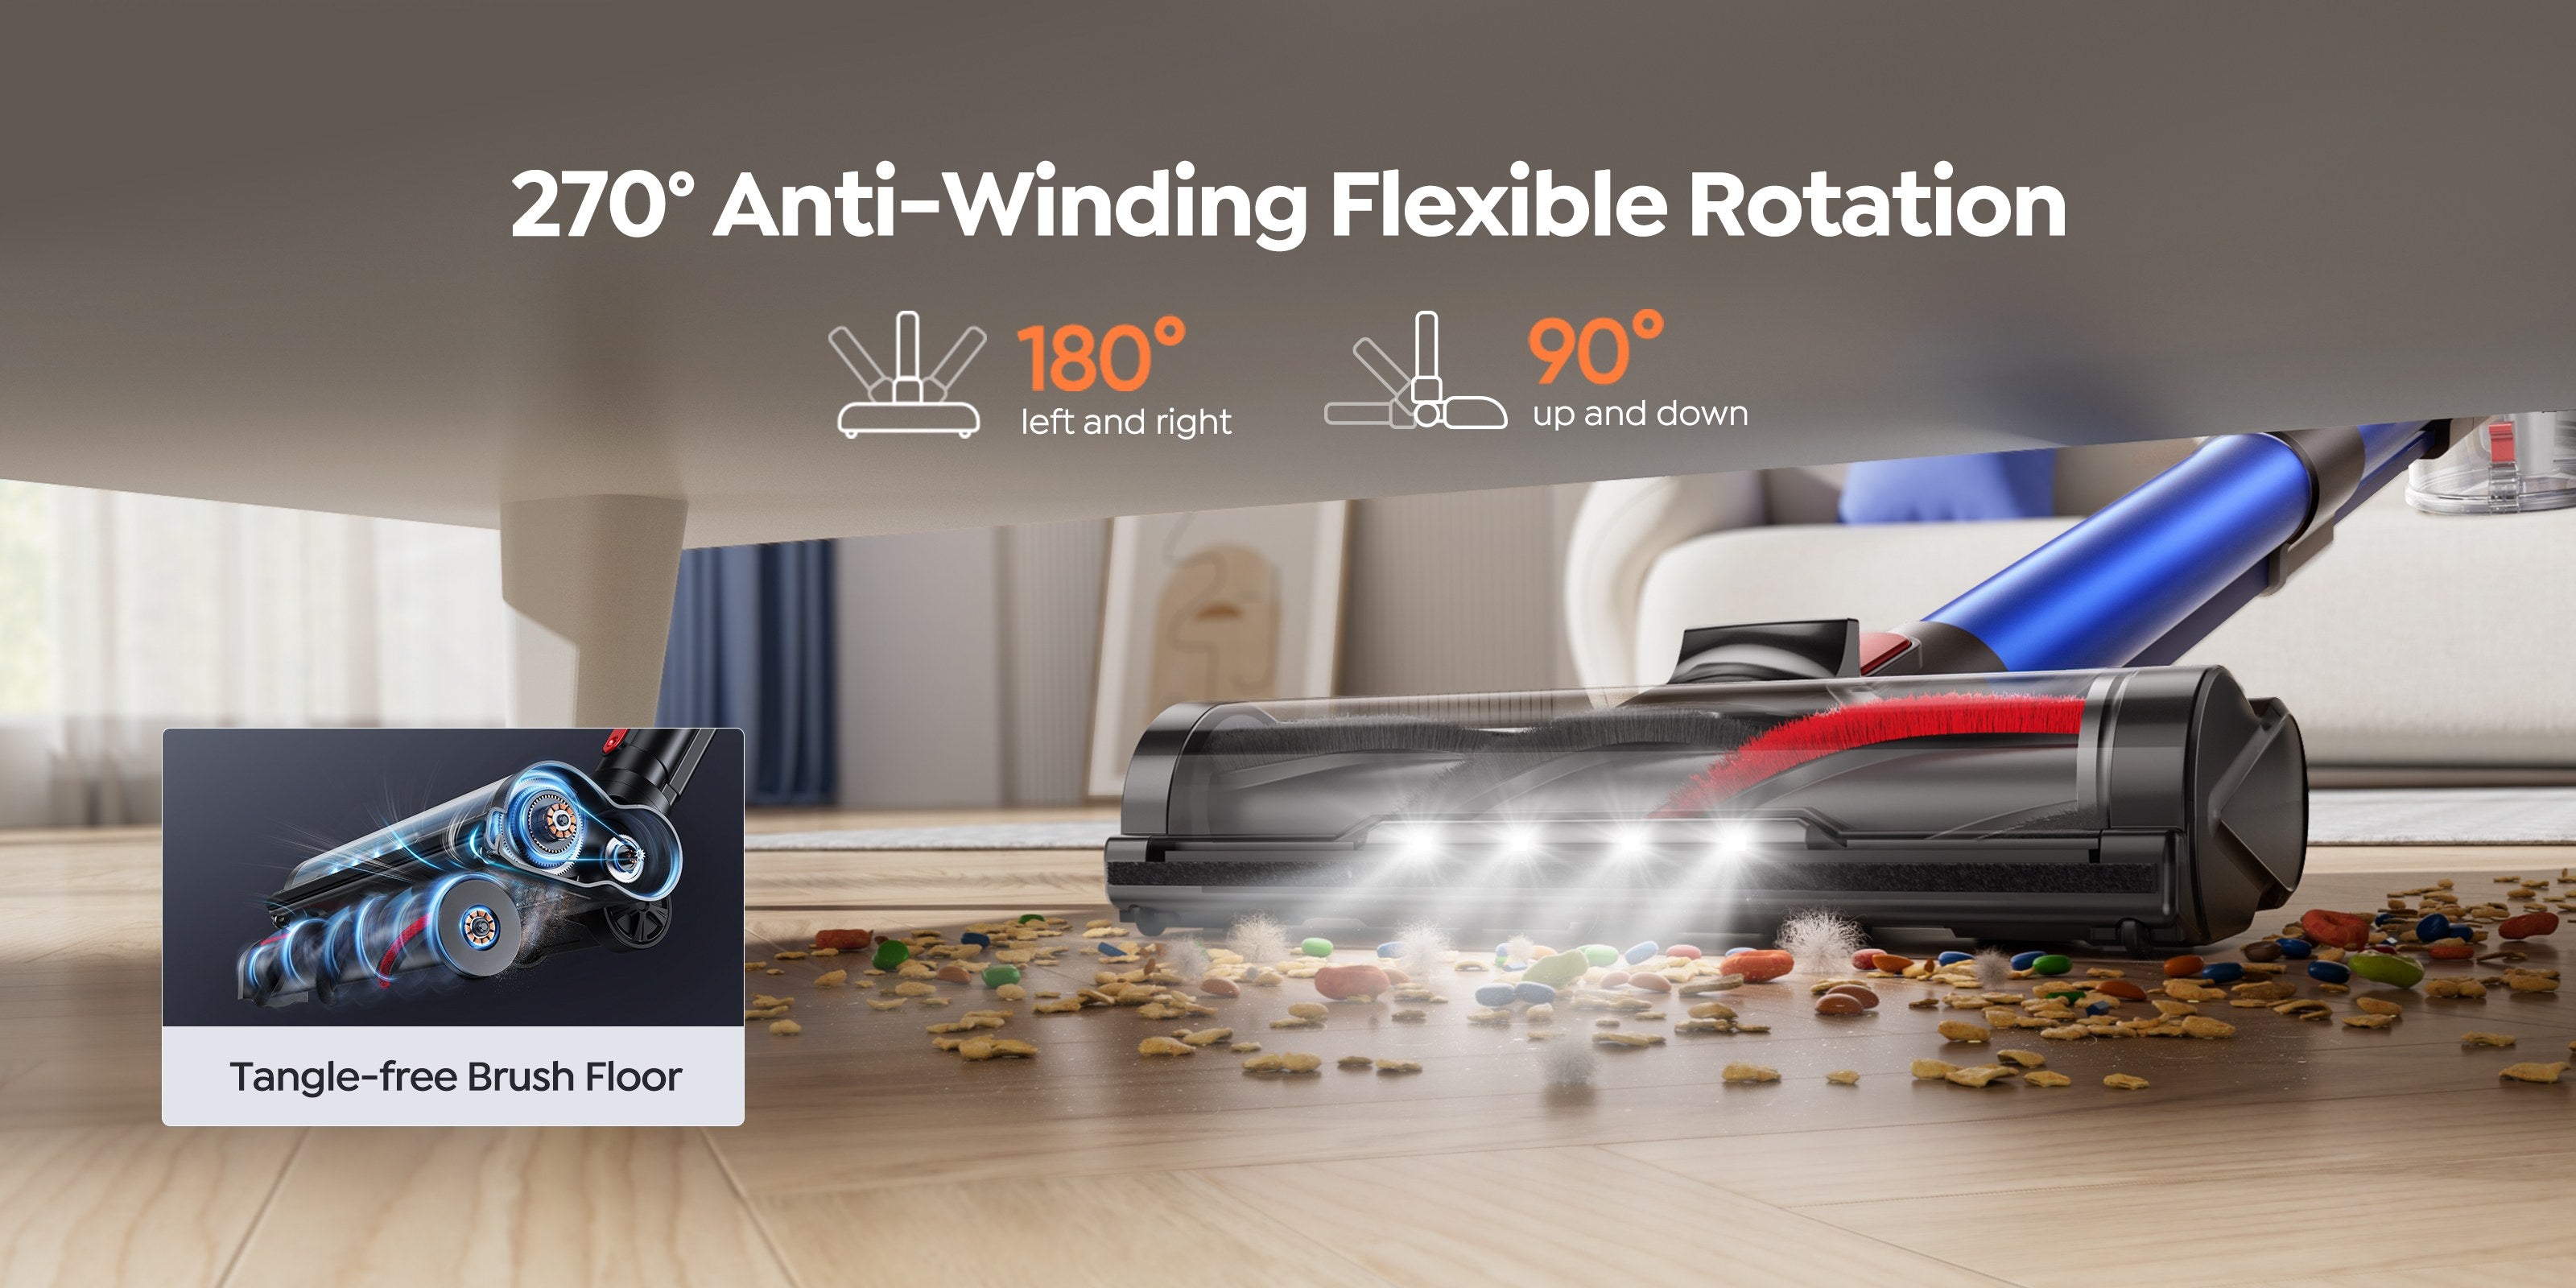 270° anti winding flexible rotation